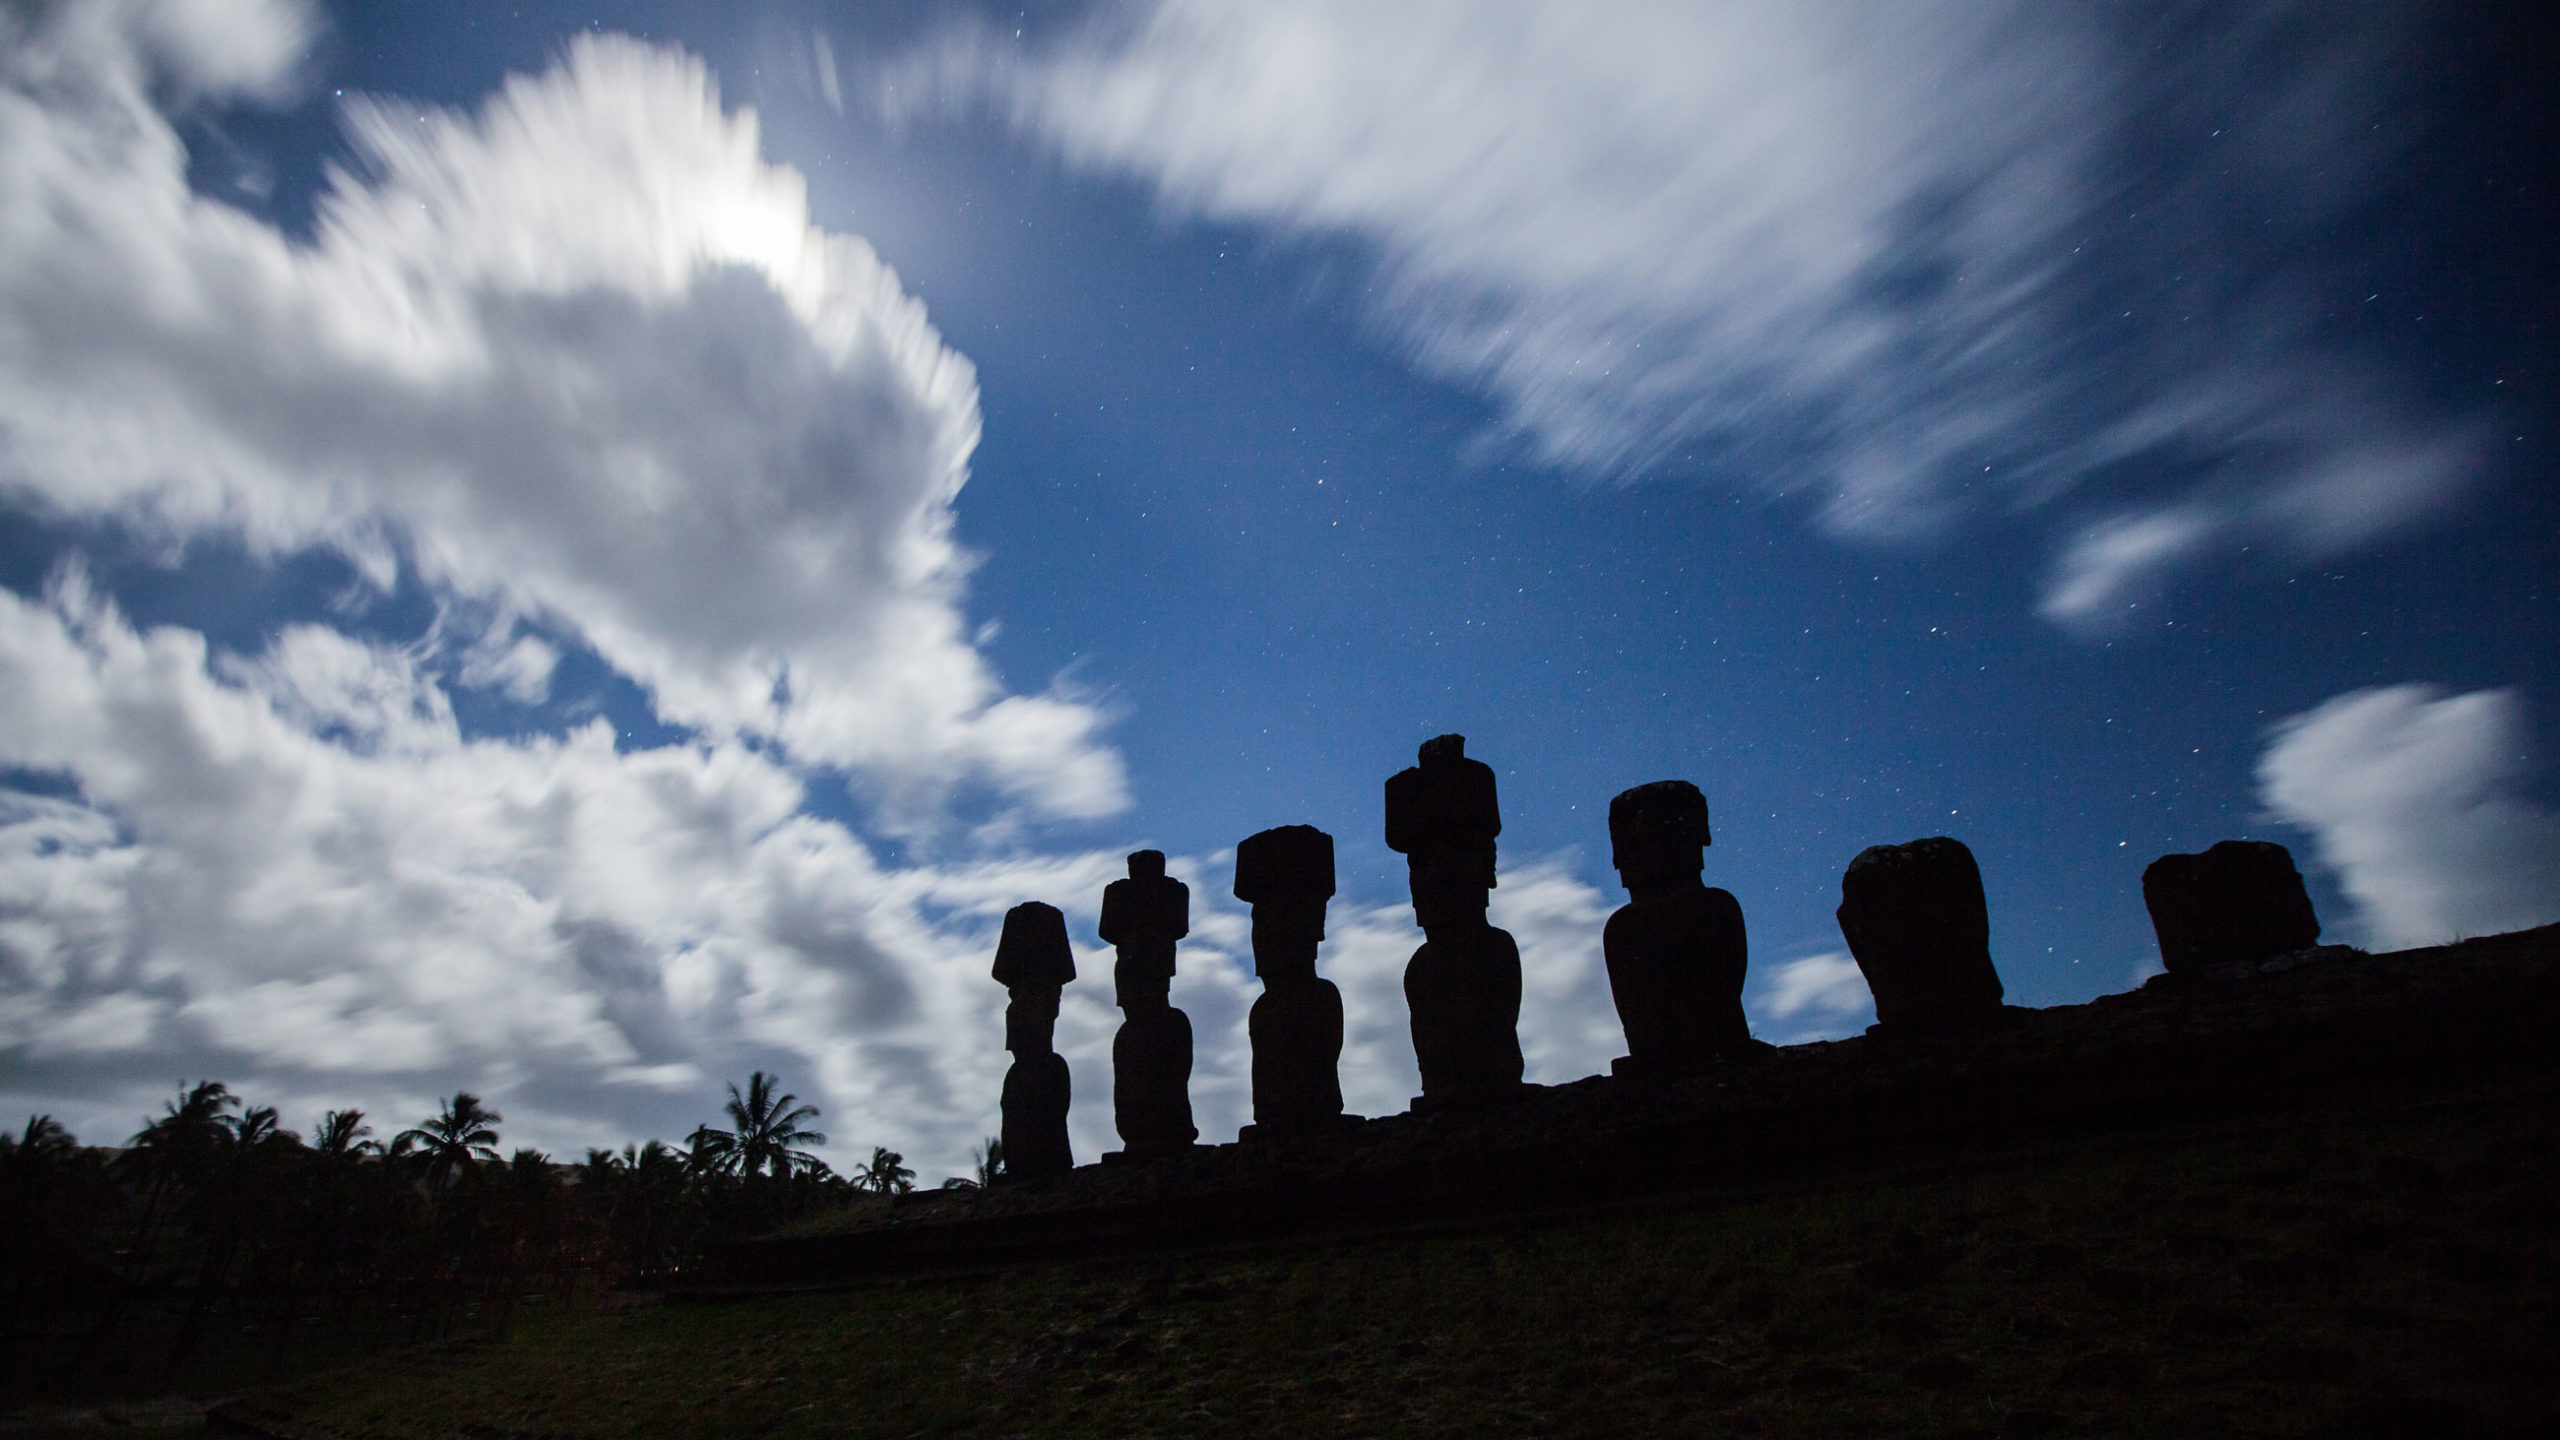 Easter Island Moai Statues at night